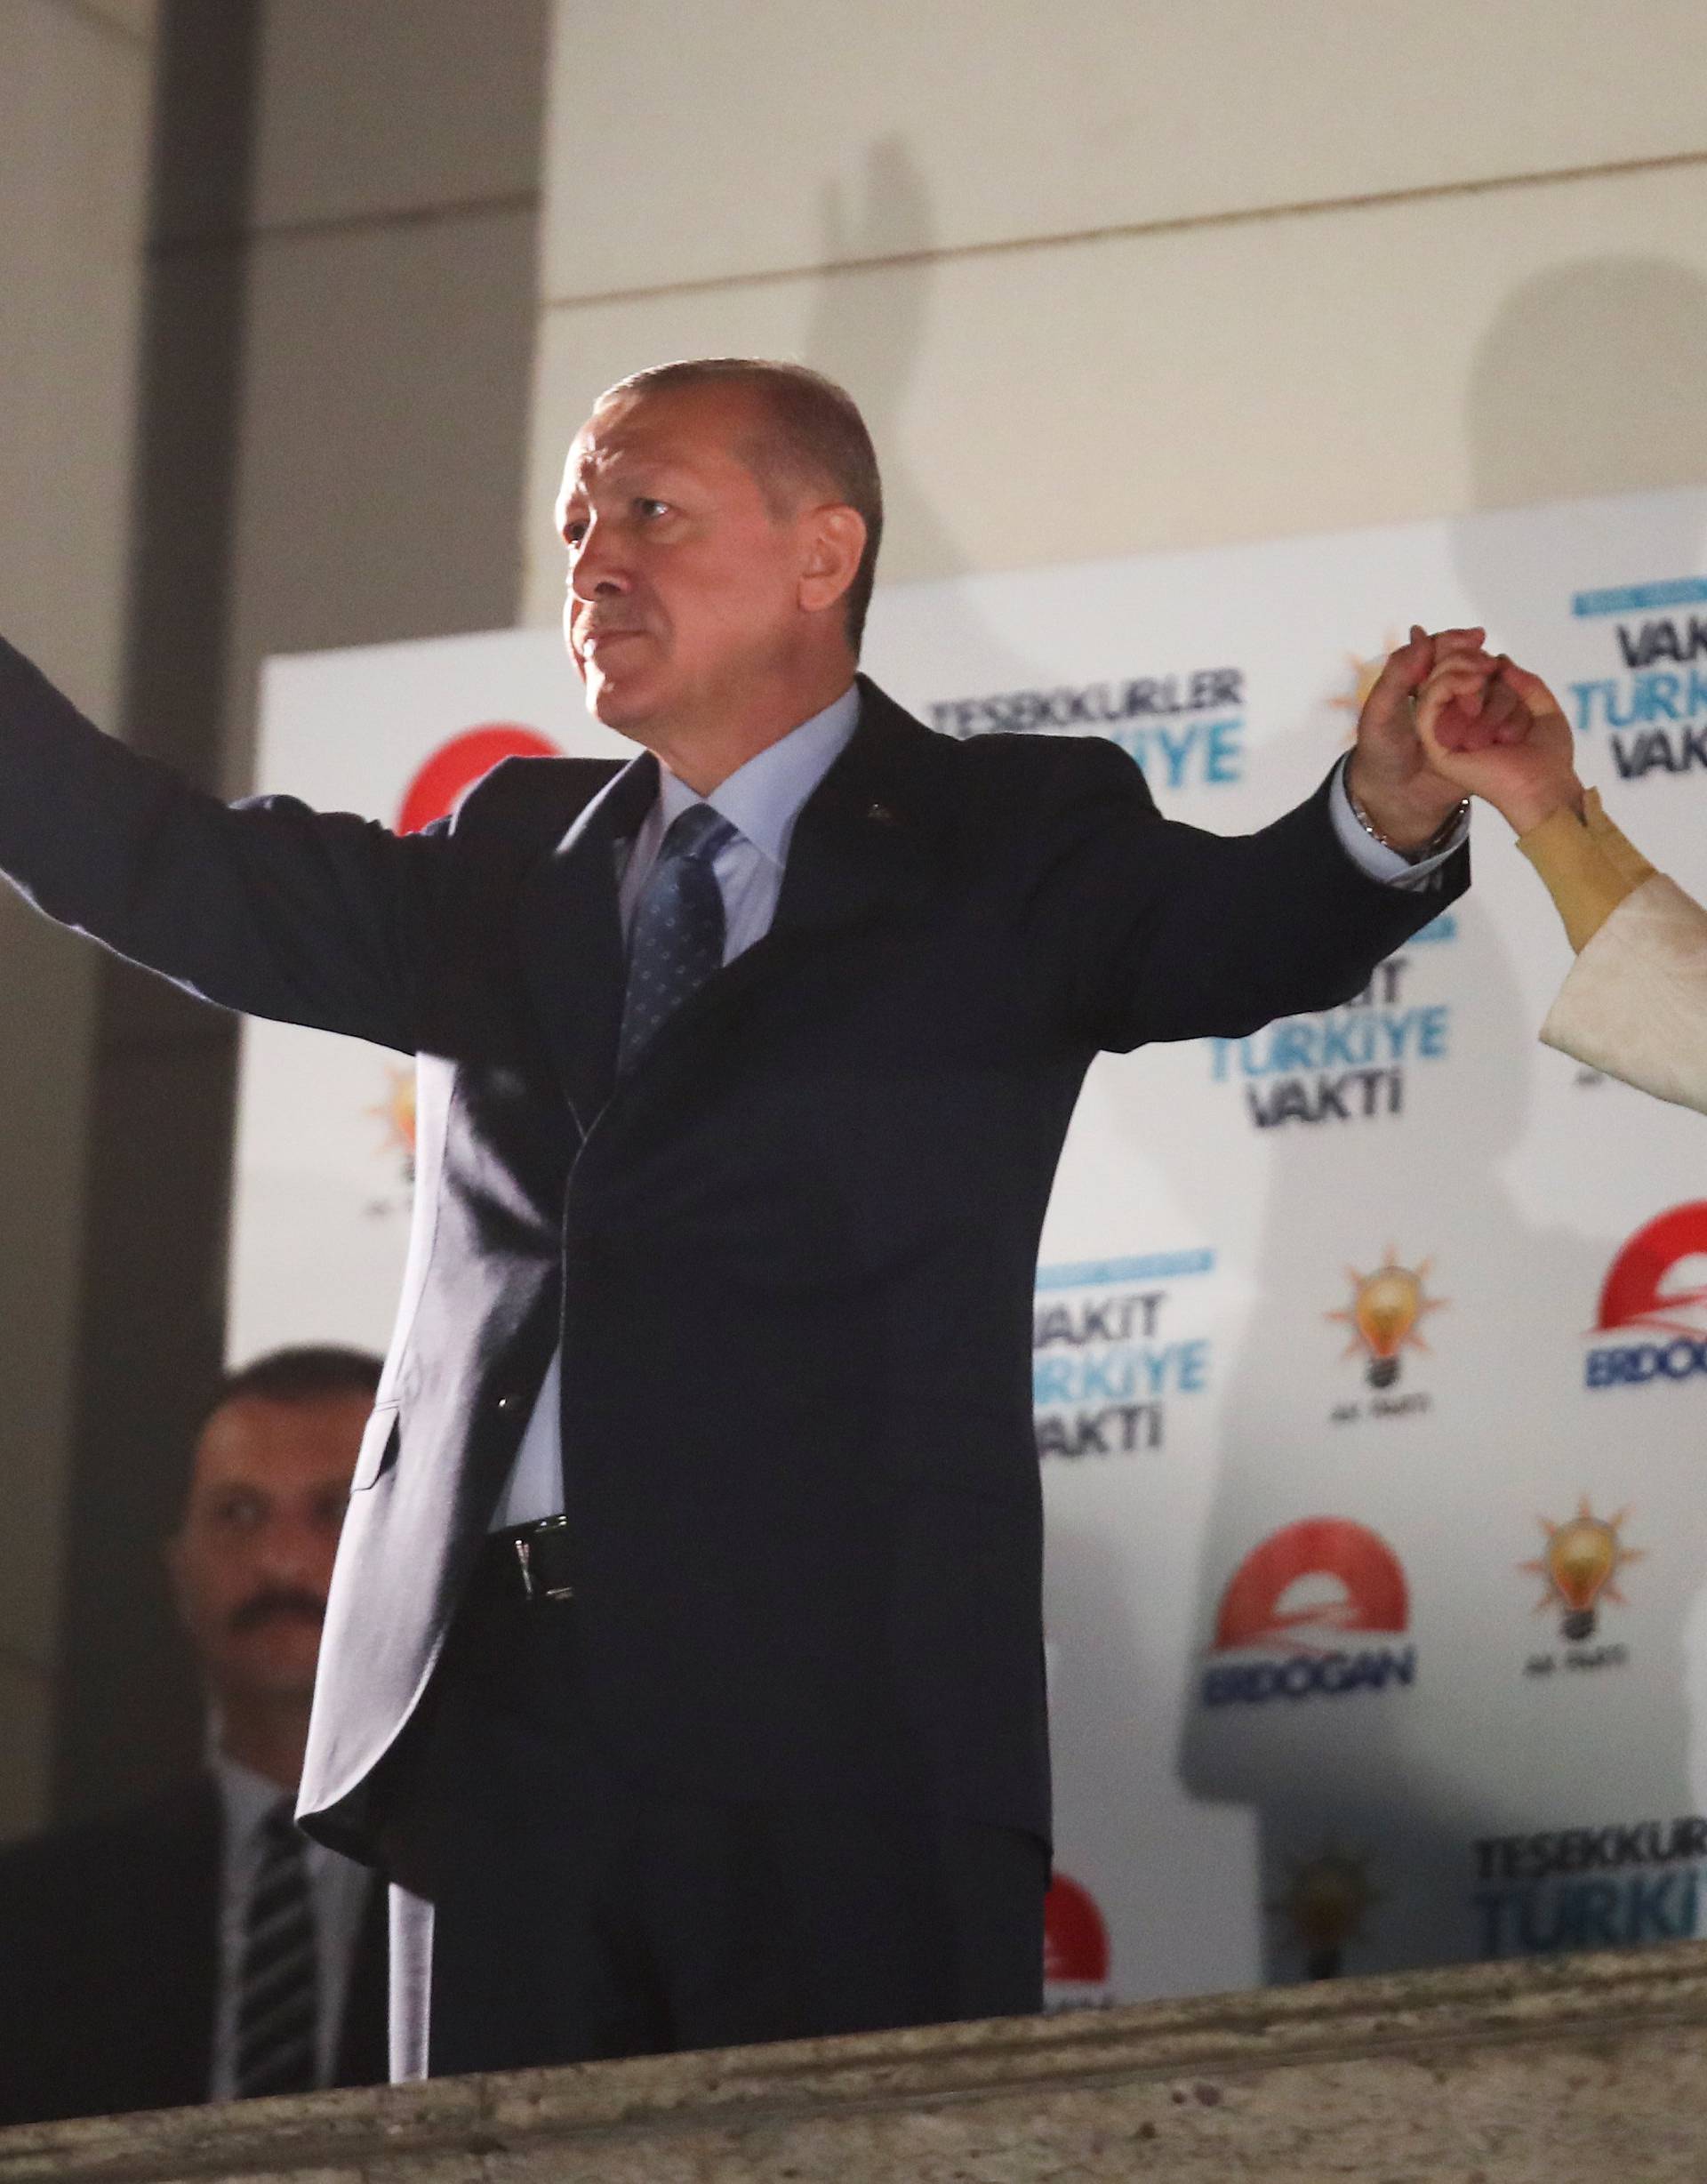 Turkish President Tayyip Erdogan and his wife Emine Erdogan greet supporters at the AKP headquarters in Ankara